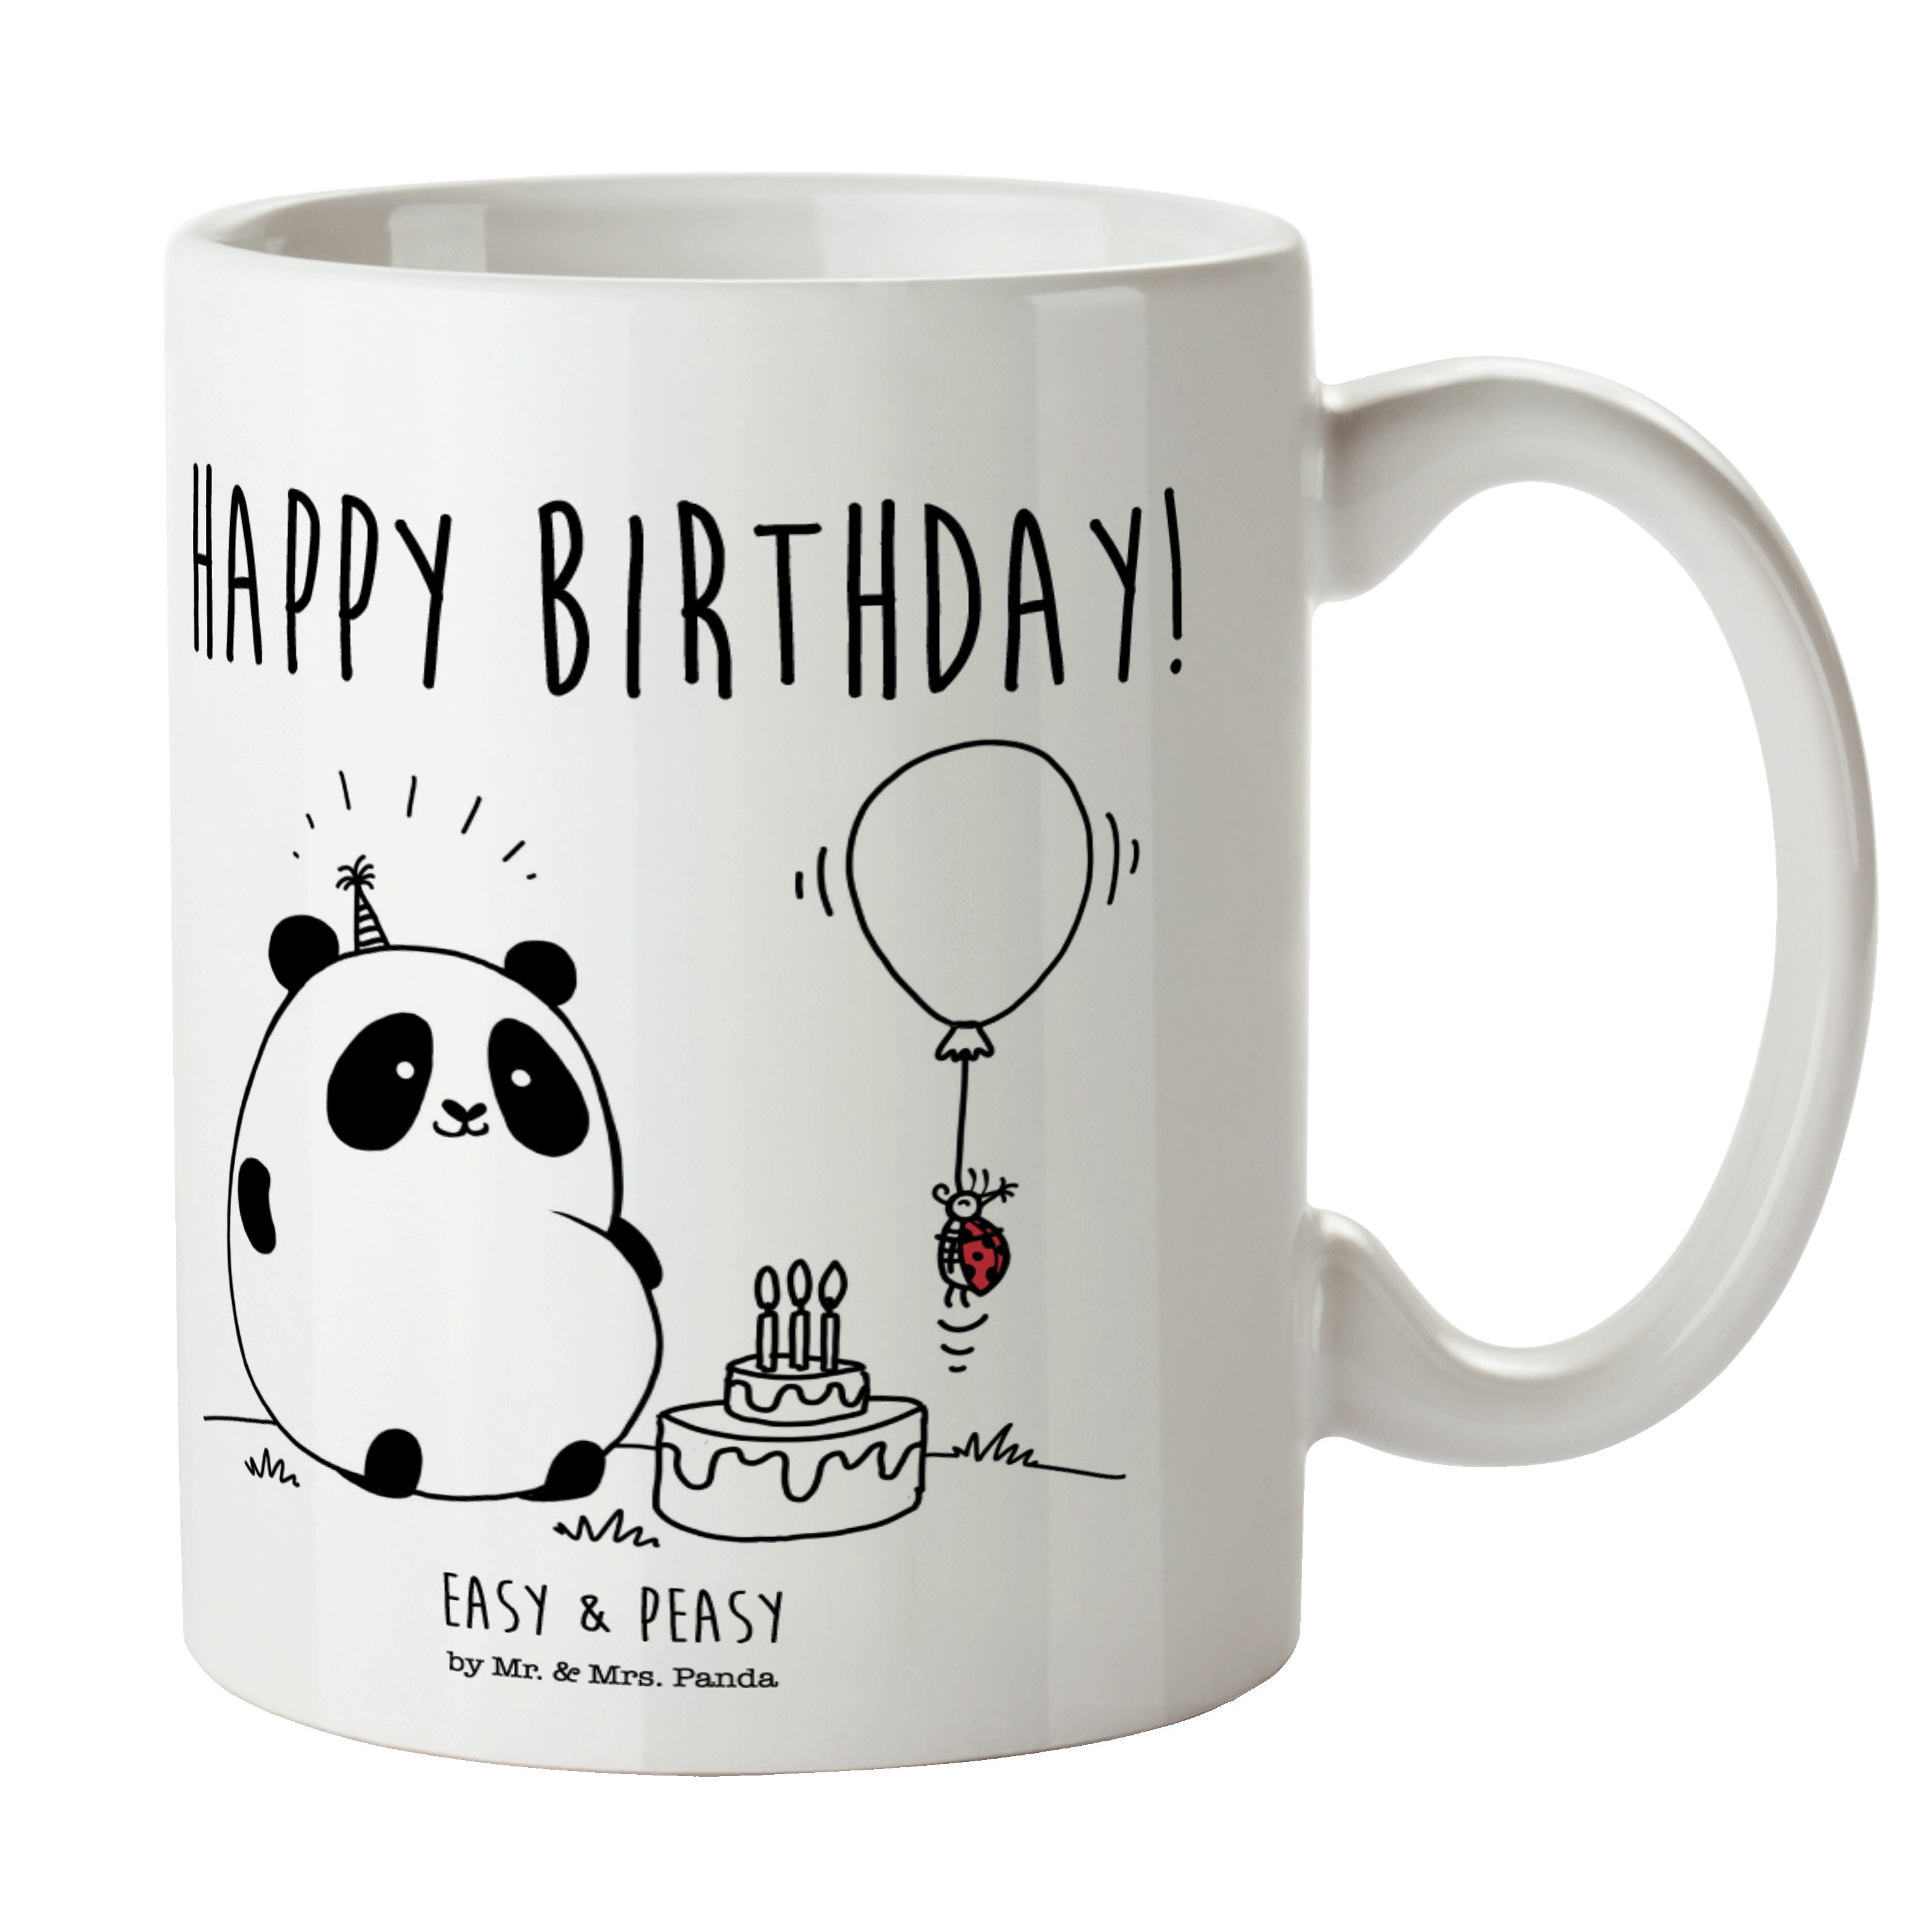 Mr. & Mrs. Panda Tasse Easy & Peasy Happy Birthday - Weiß - Geschenk, Teebecher, Büro Tasse, Keramik